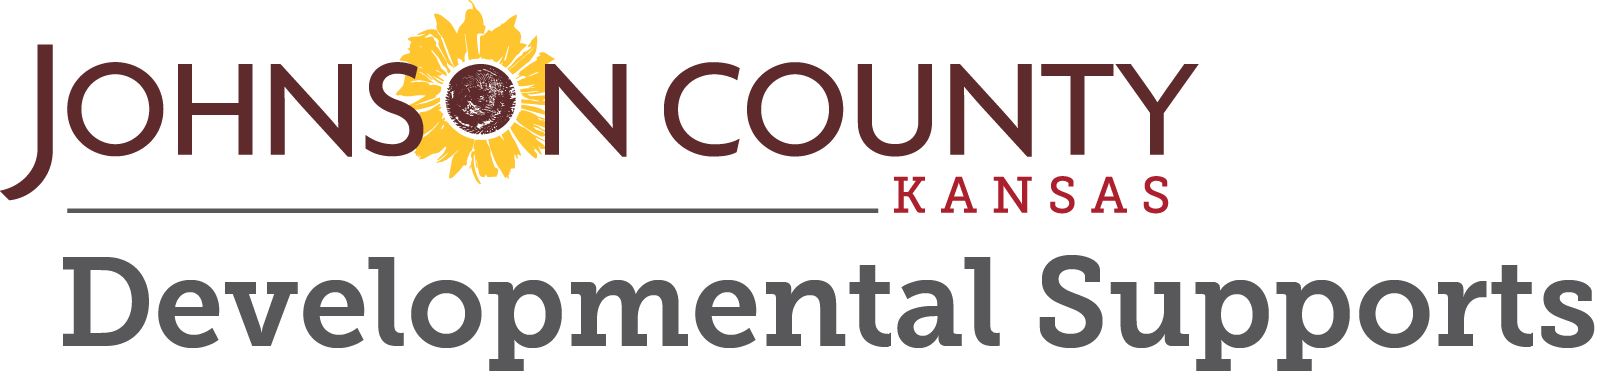 JoCo Kansas Developmental Supports logo